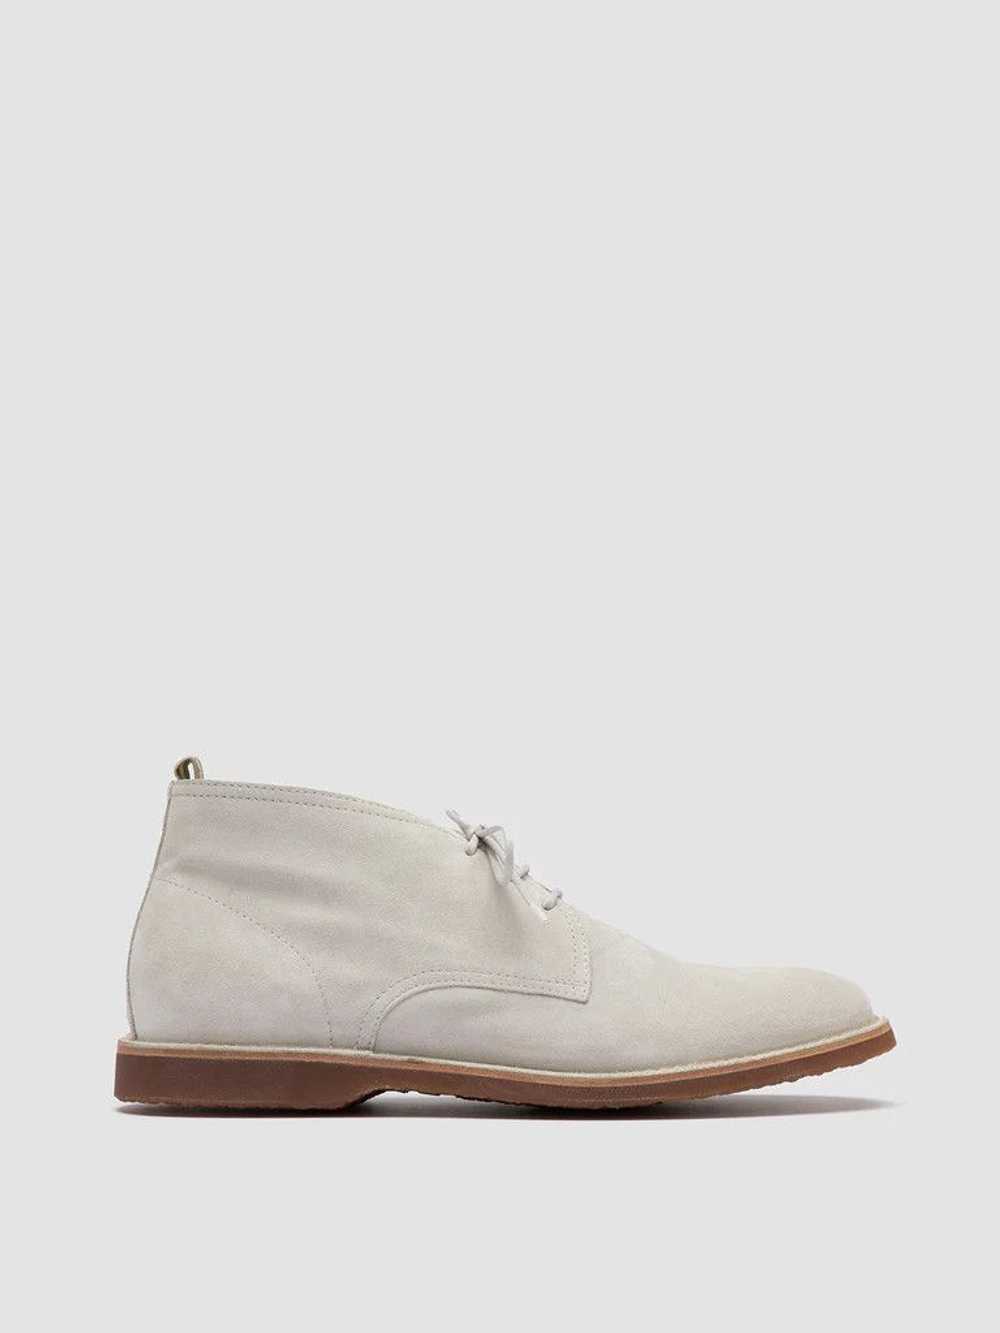 Brunello Cucinelli o1w1db10524 Shoes in White - image 2